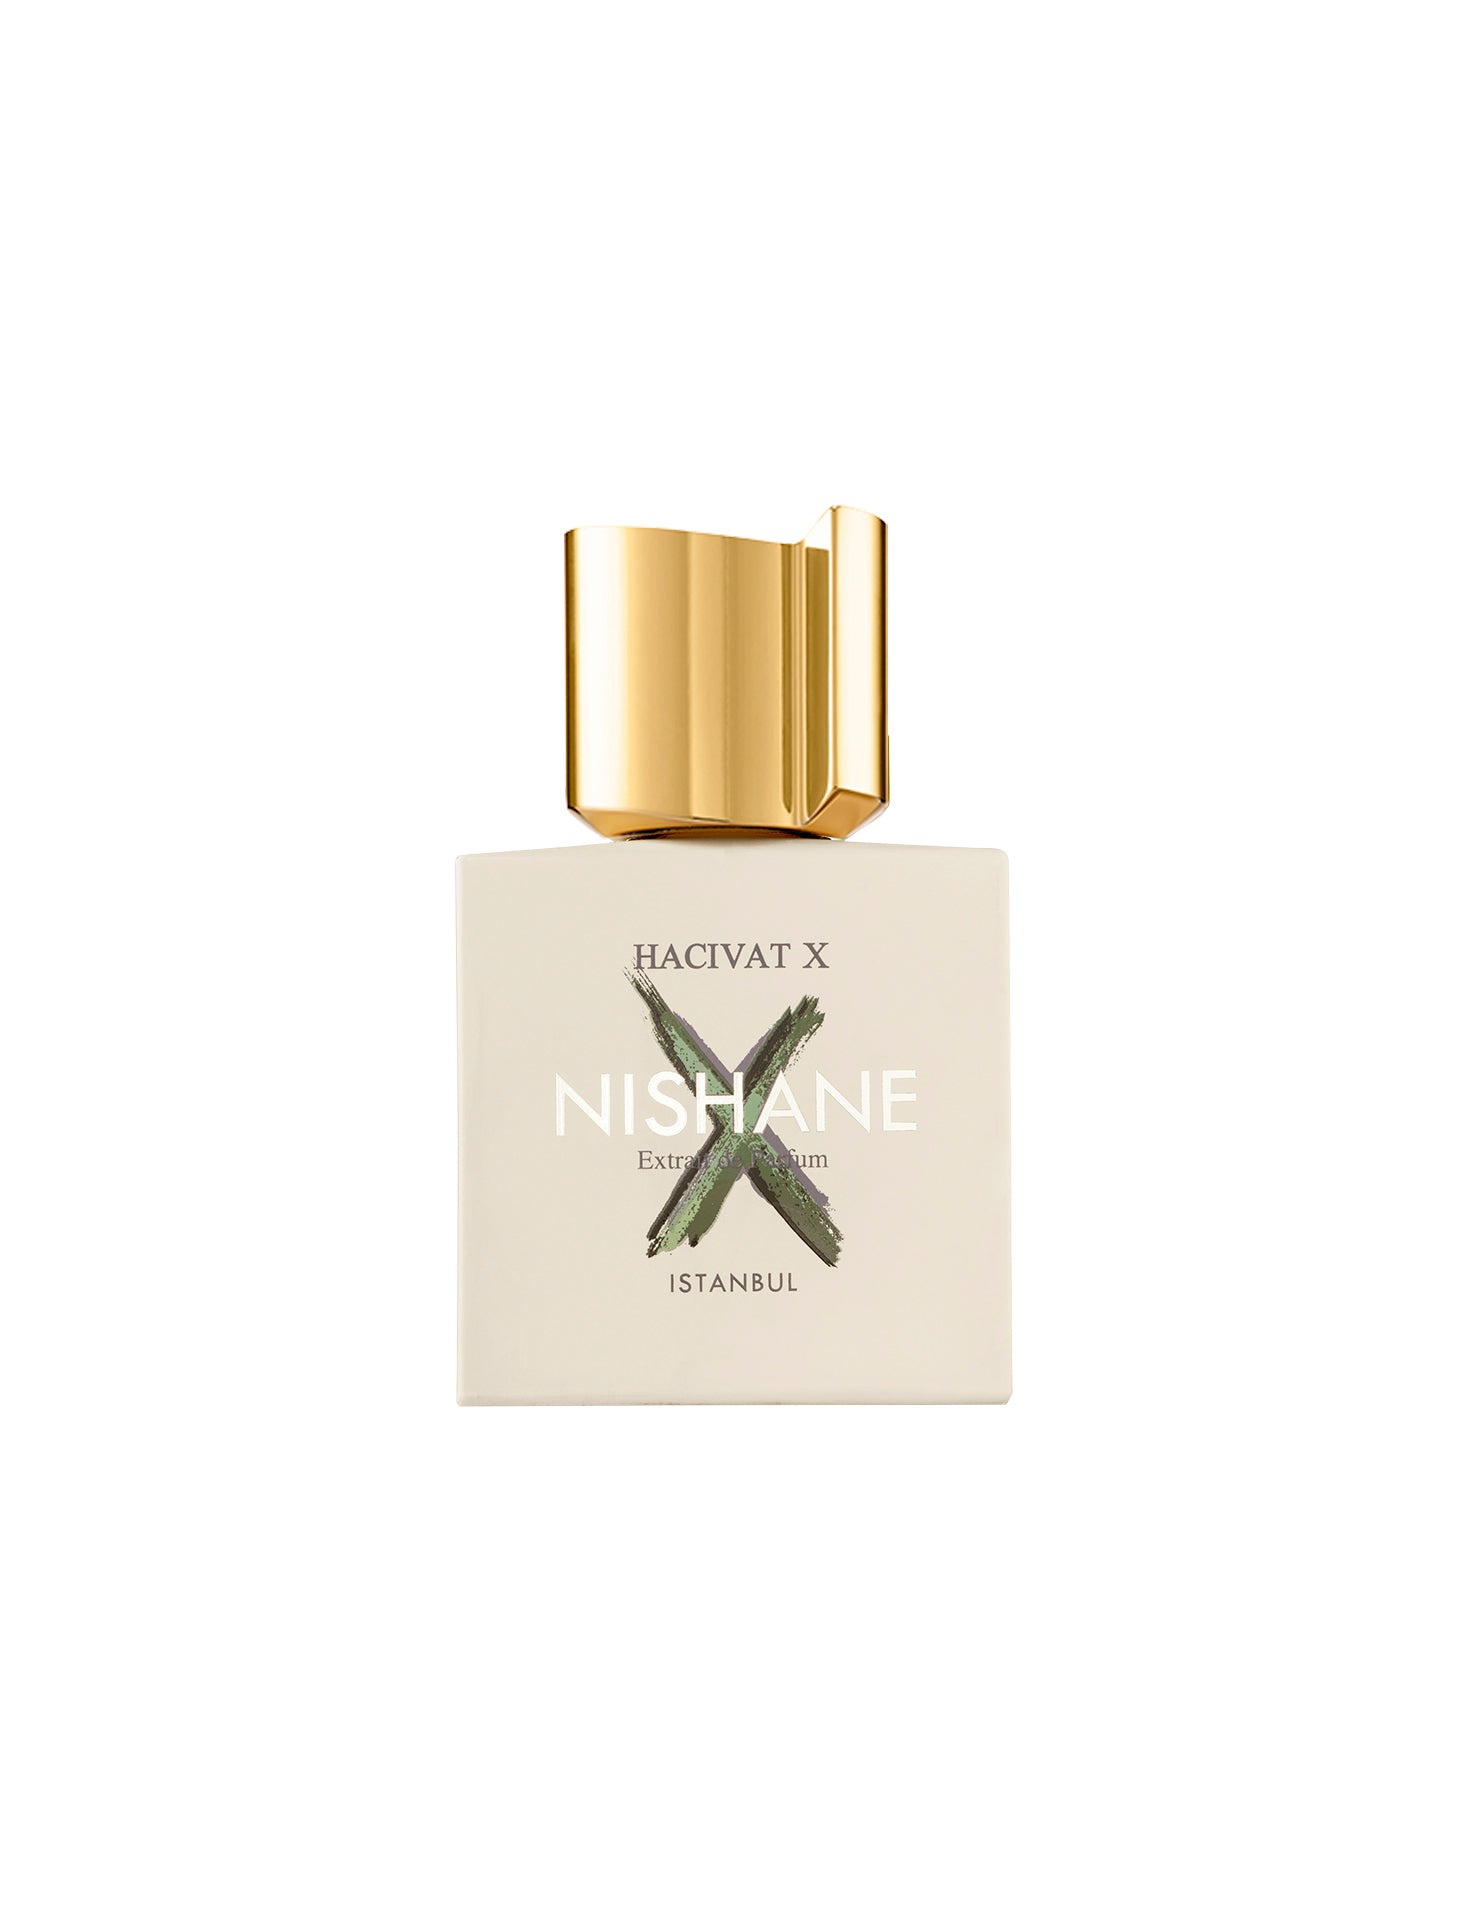 Nishane Hacivat X UNIVERSAL > Extrait de Parfum